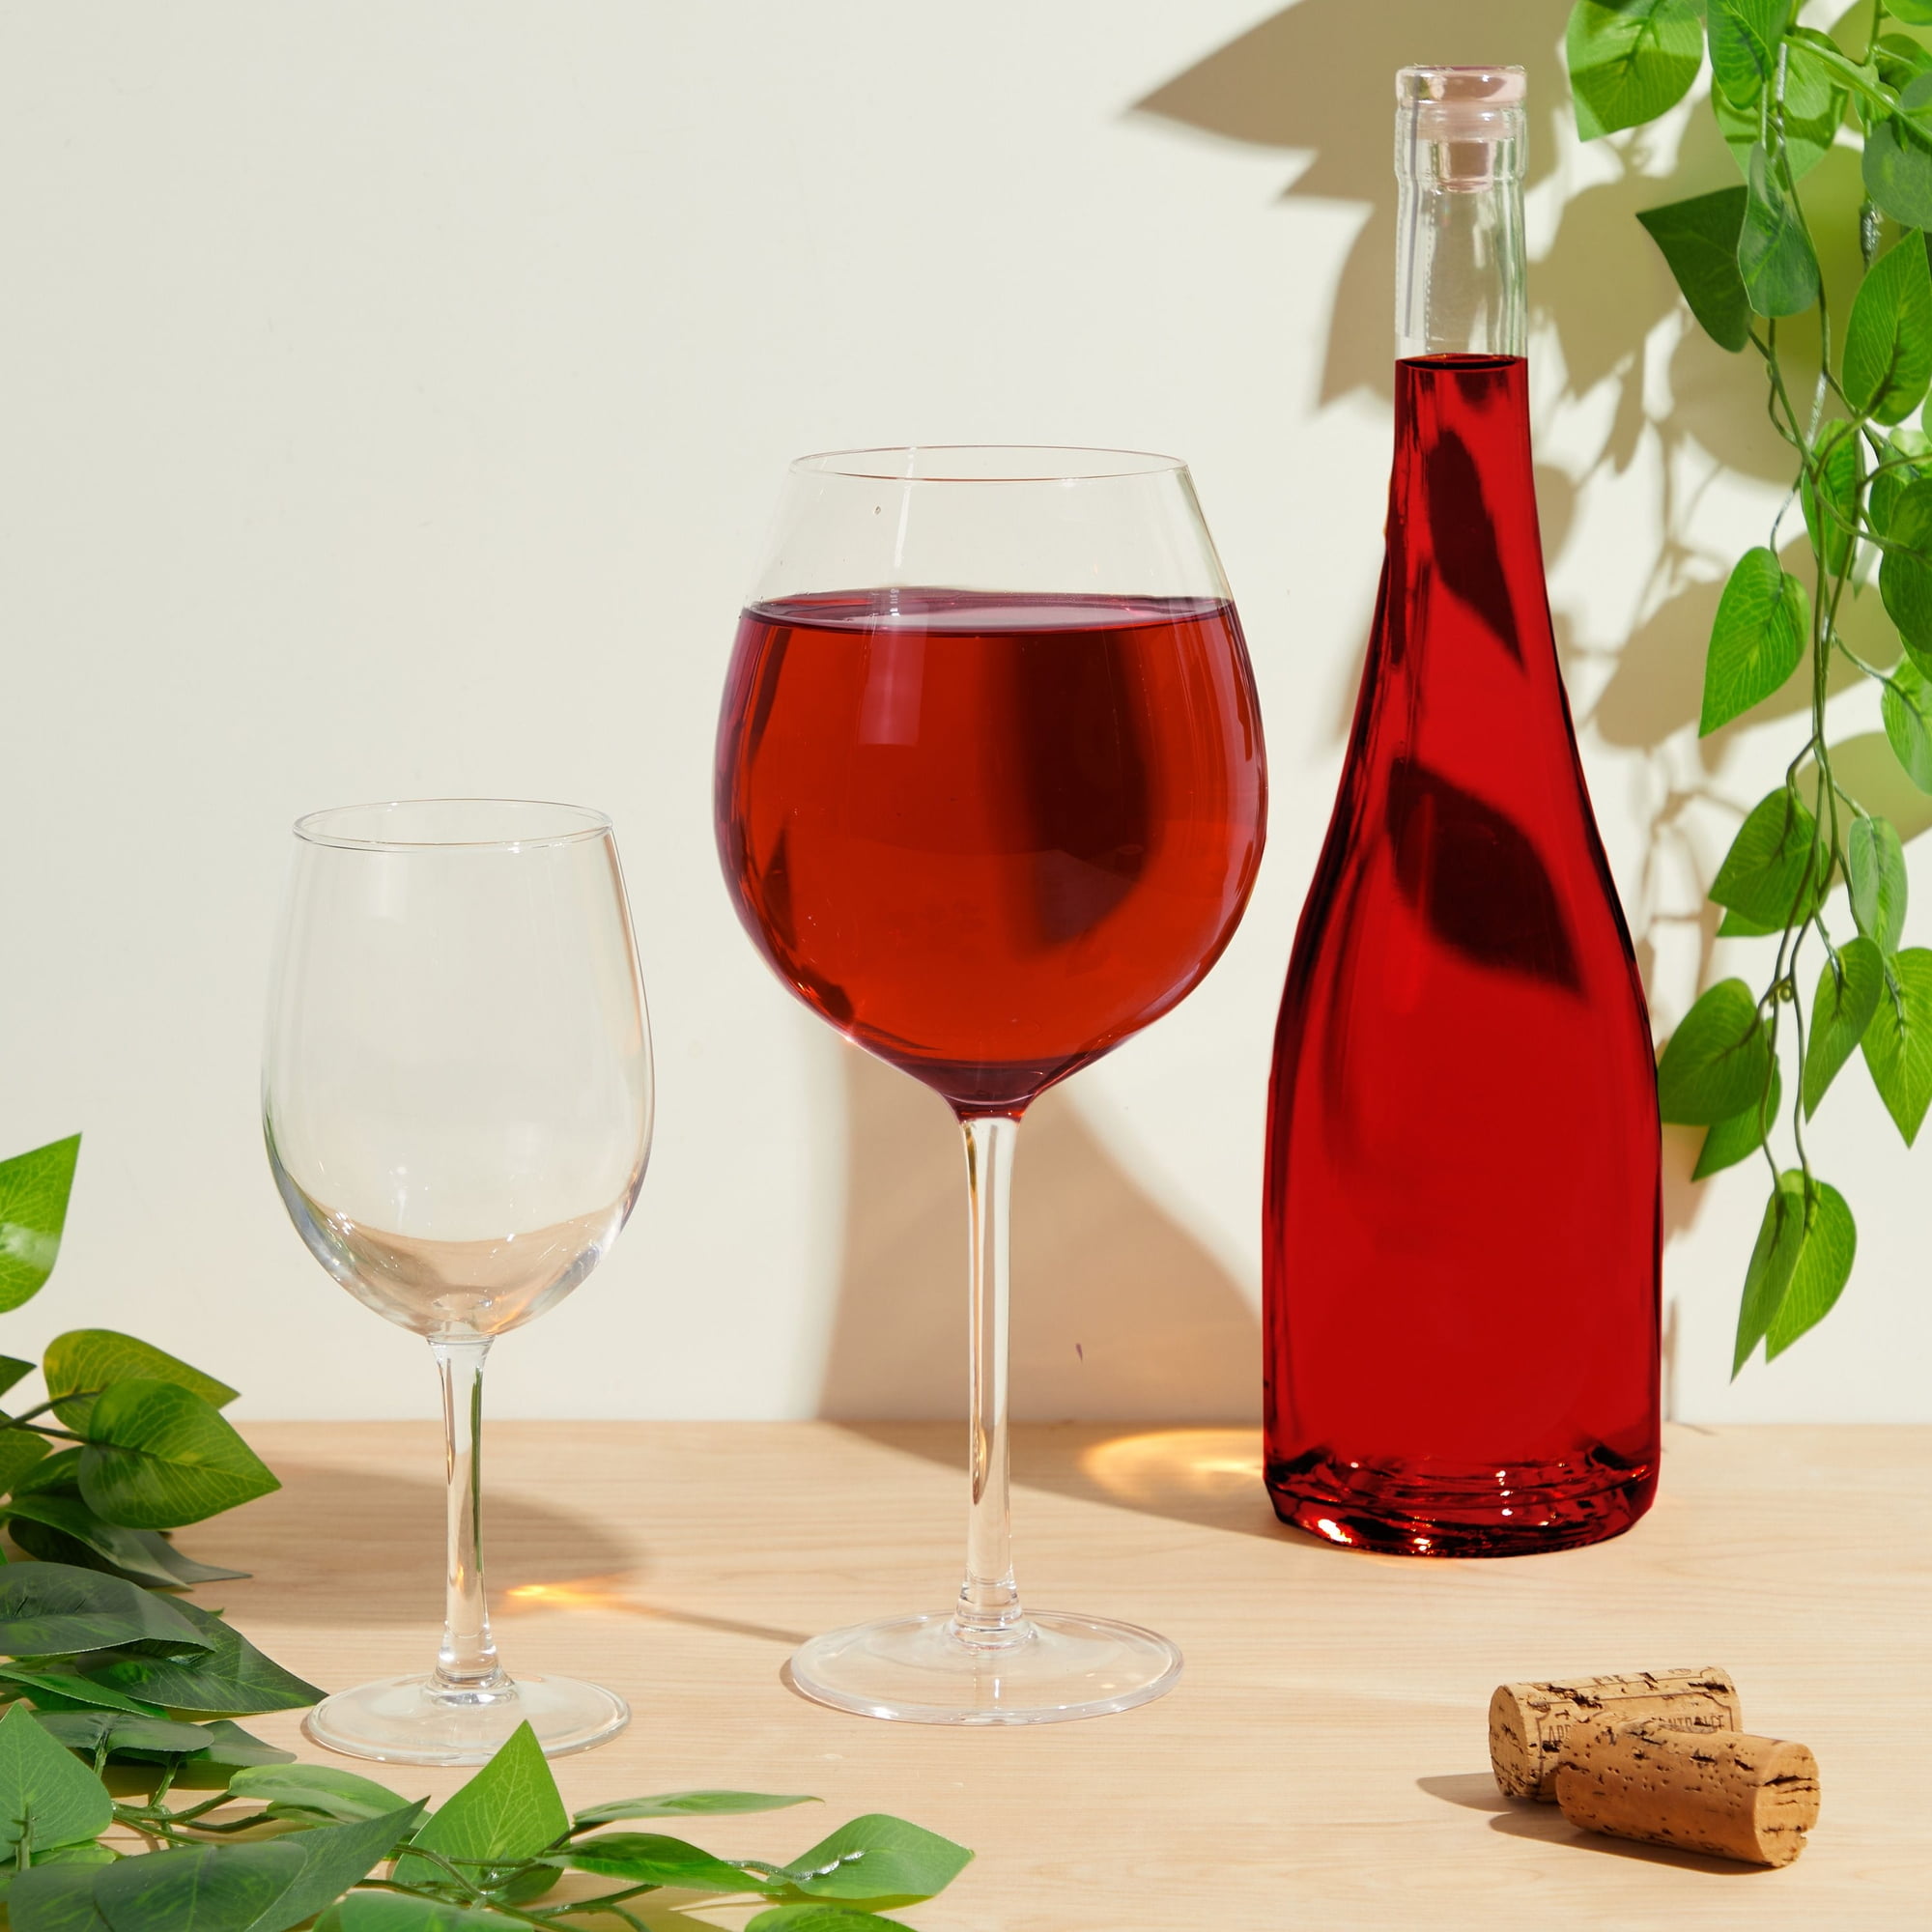 Oversized XL Giant Clear Wine Glass - 750 ml - Holds a full bottle